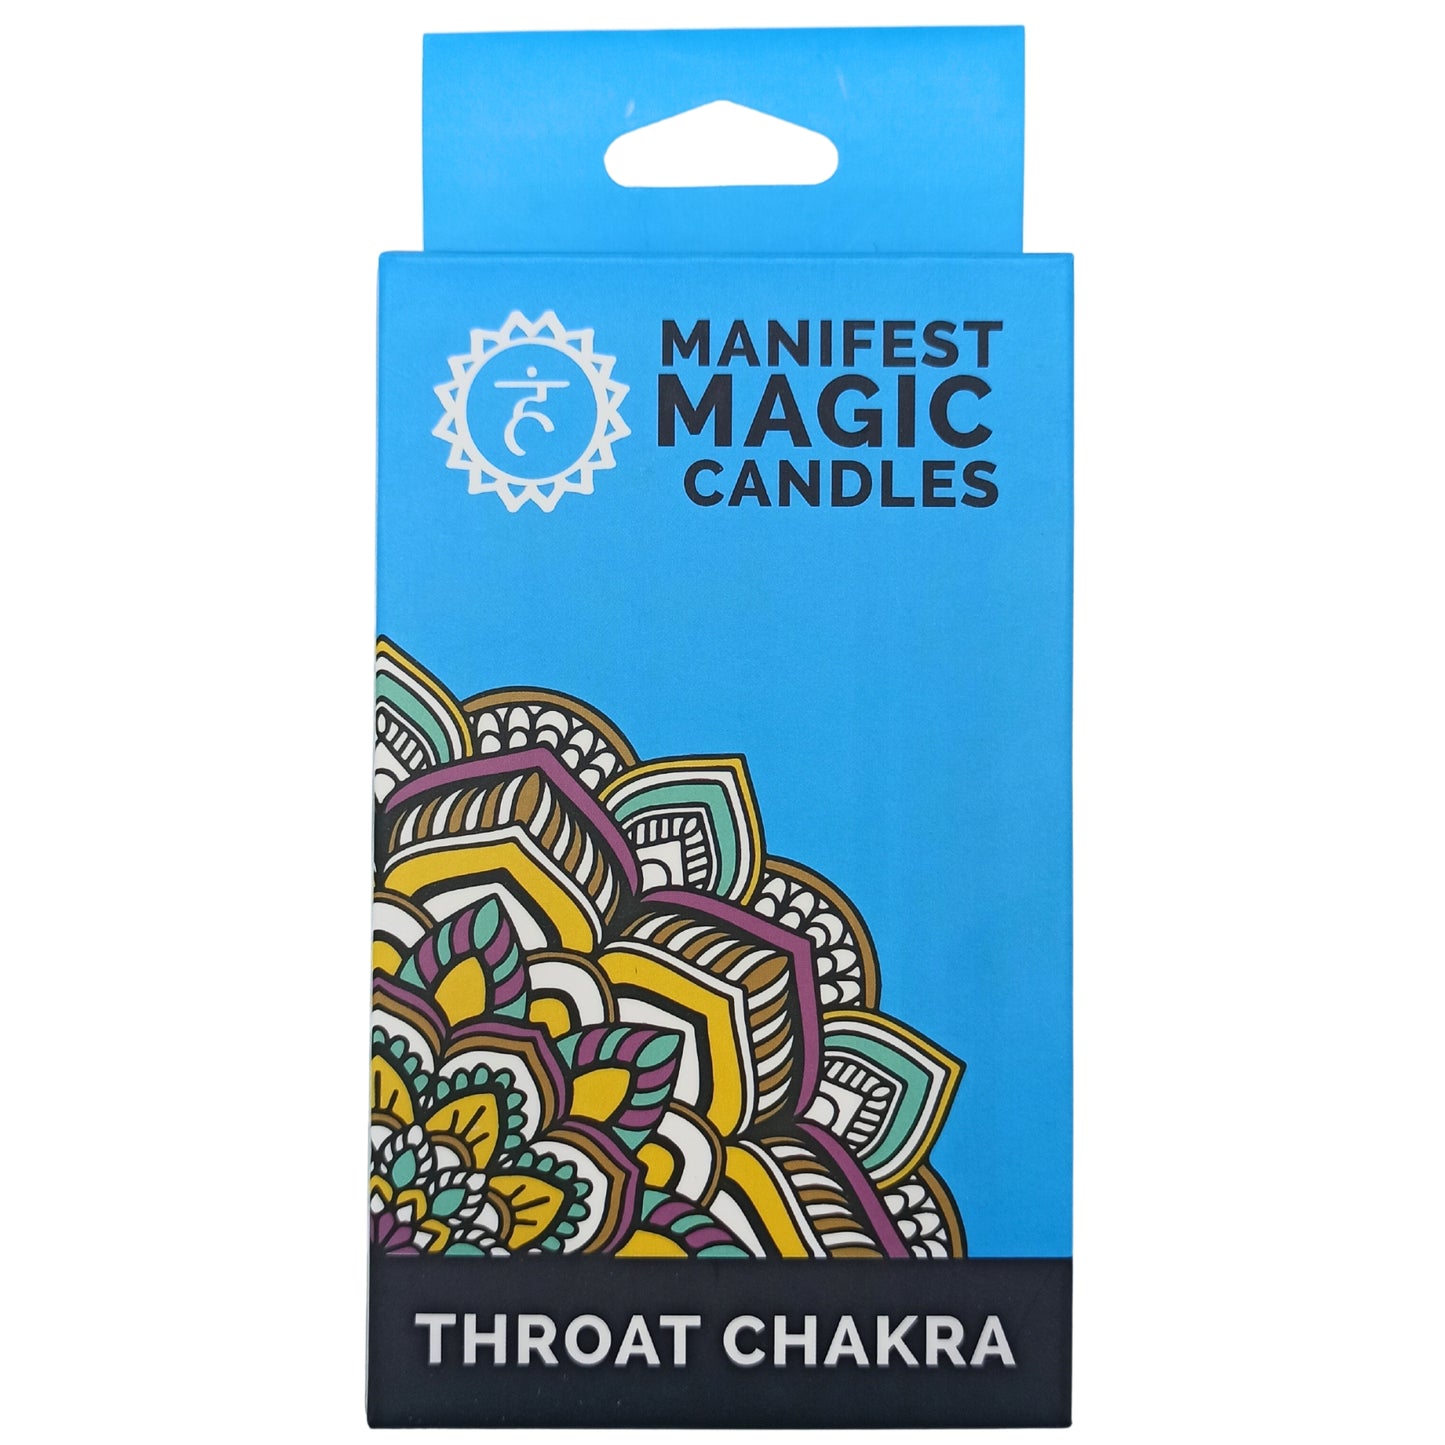 Manifest Magic Candles (pack of 12) - Blue - Throat Chakra